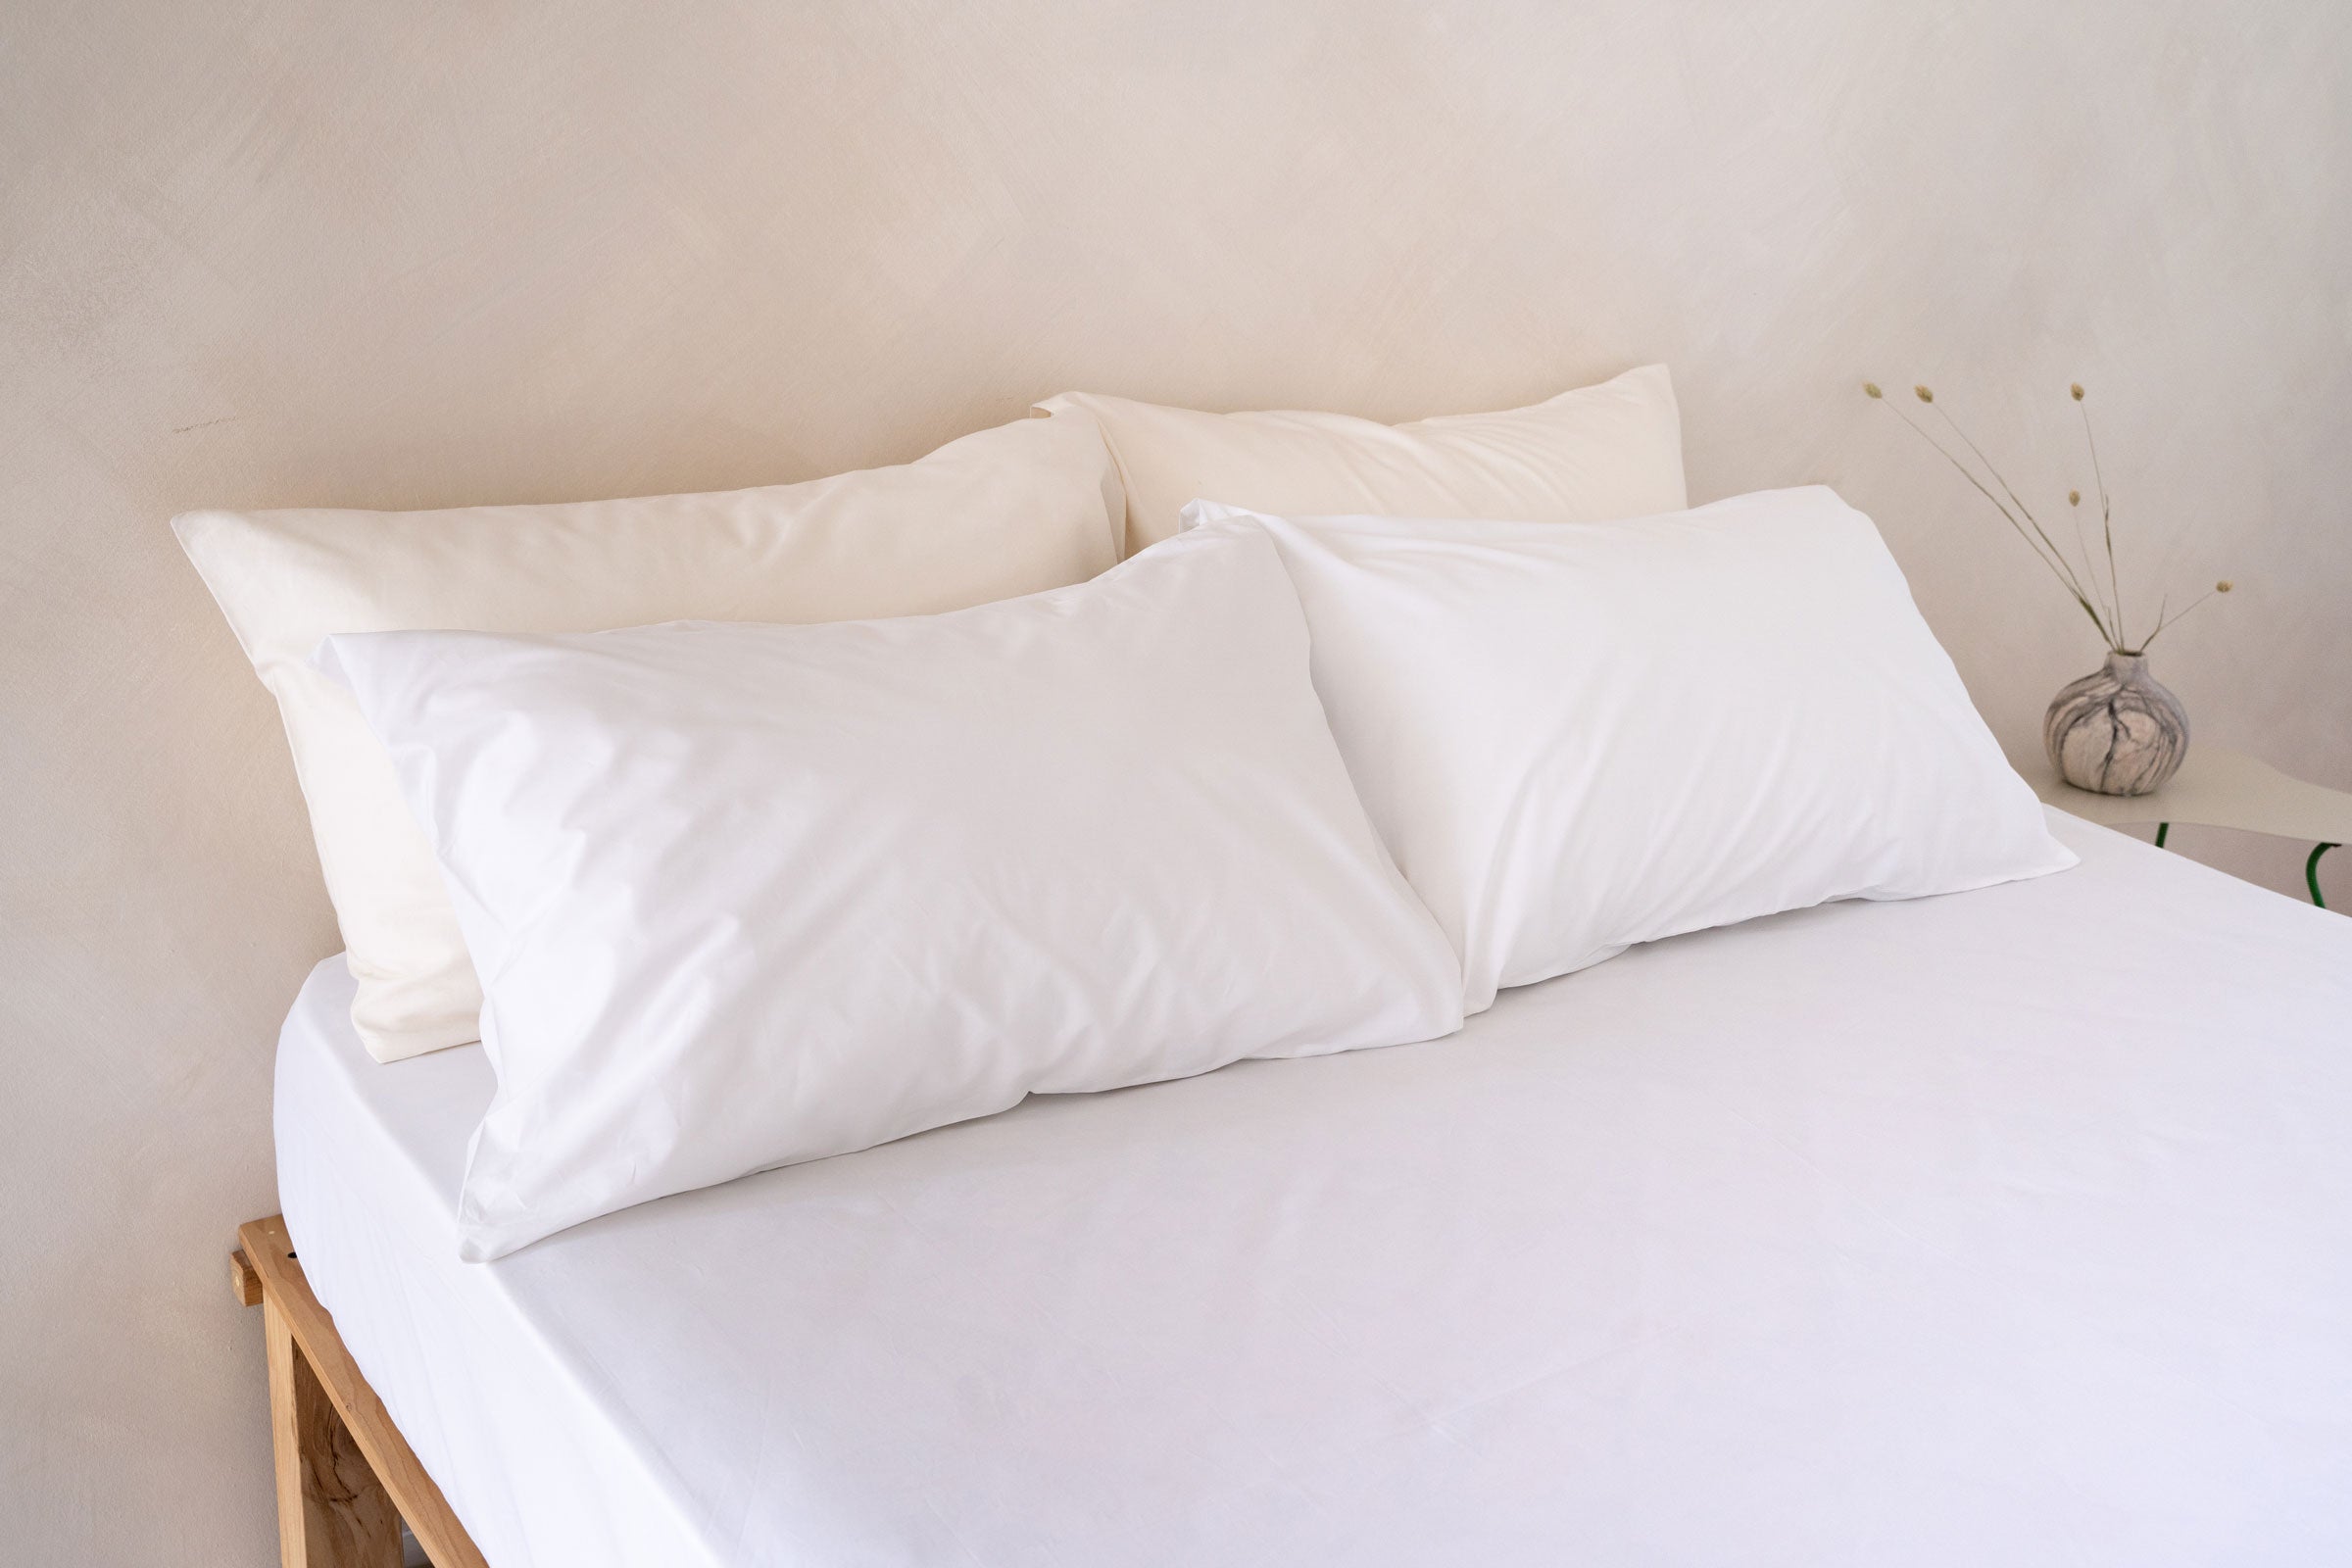 crisp-white-fitted-sheet-pillowcase-pair-classic-natural--pillowcase-pair-by-sojao.jpg